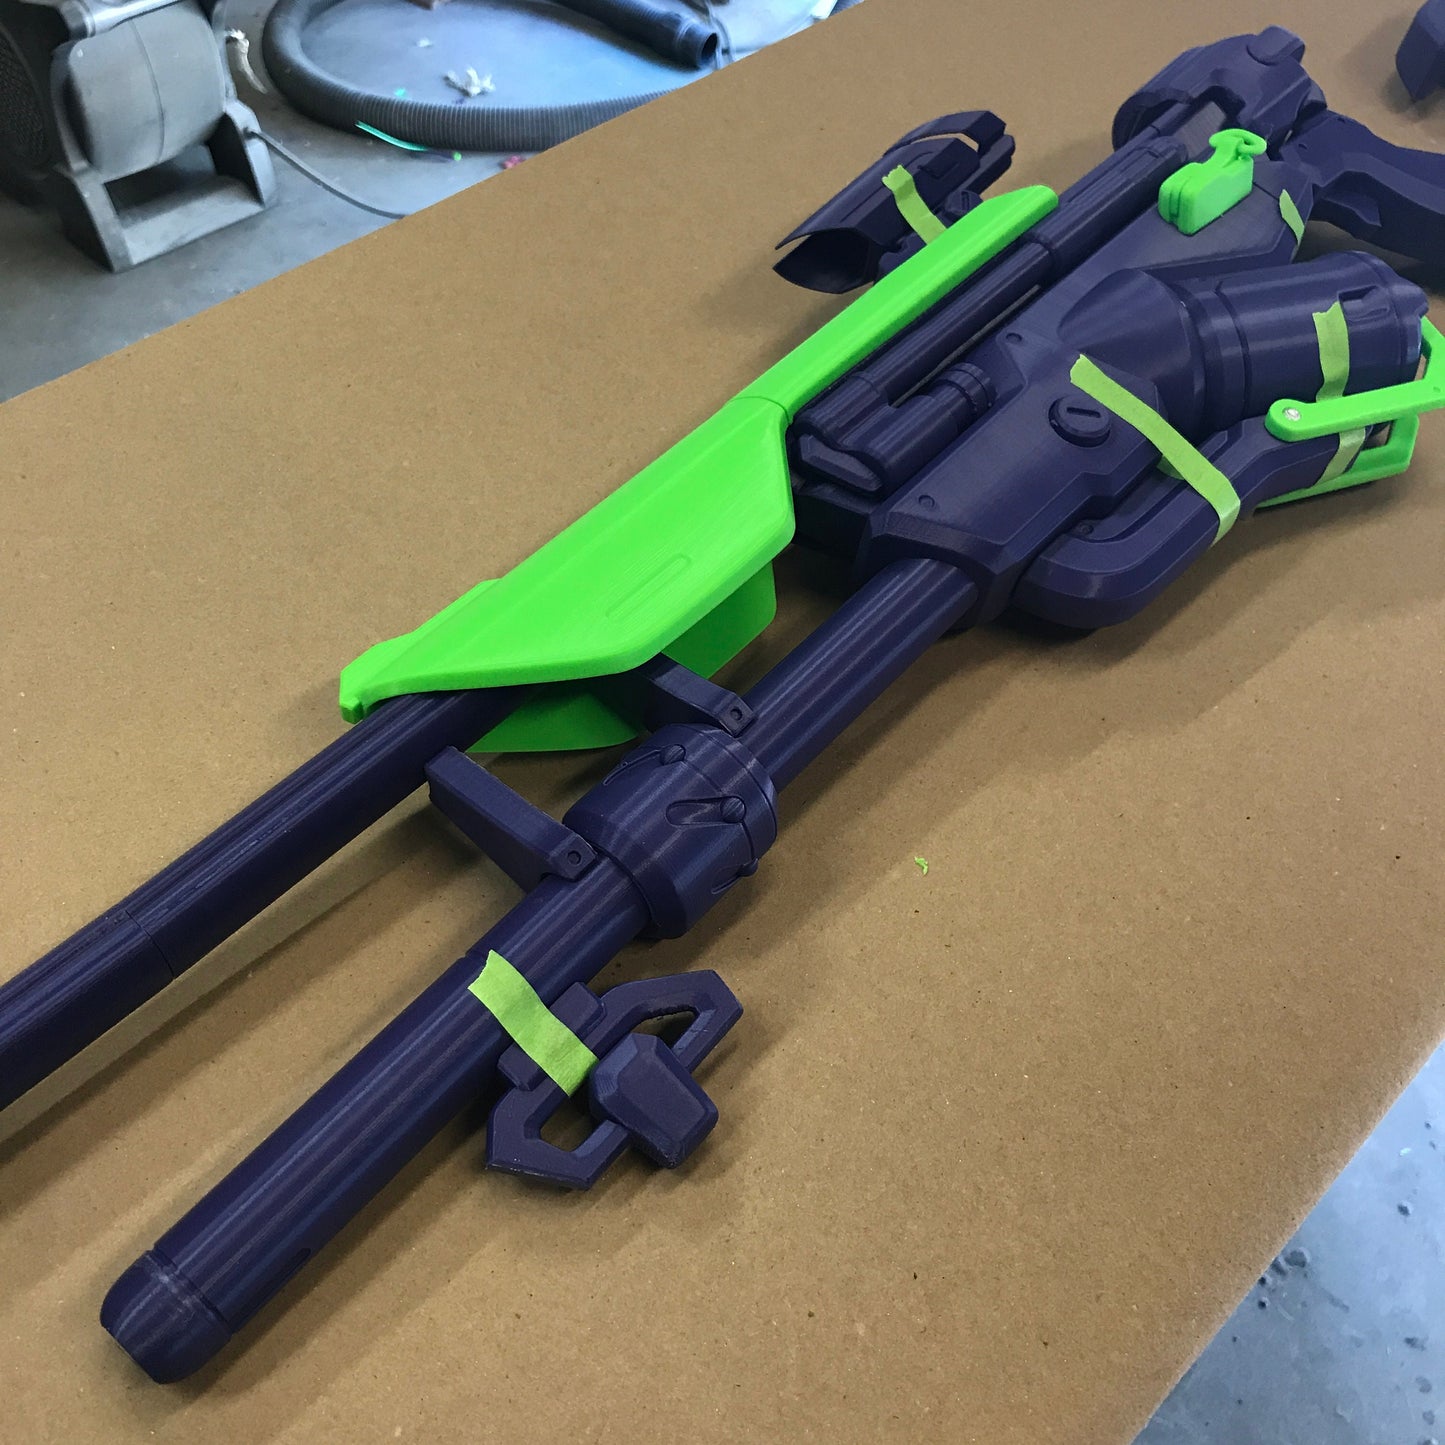 Ana Biotic Rifle Cosplay - 3D Printed kit